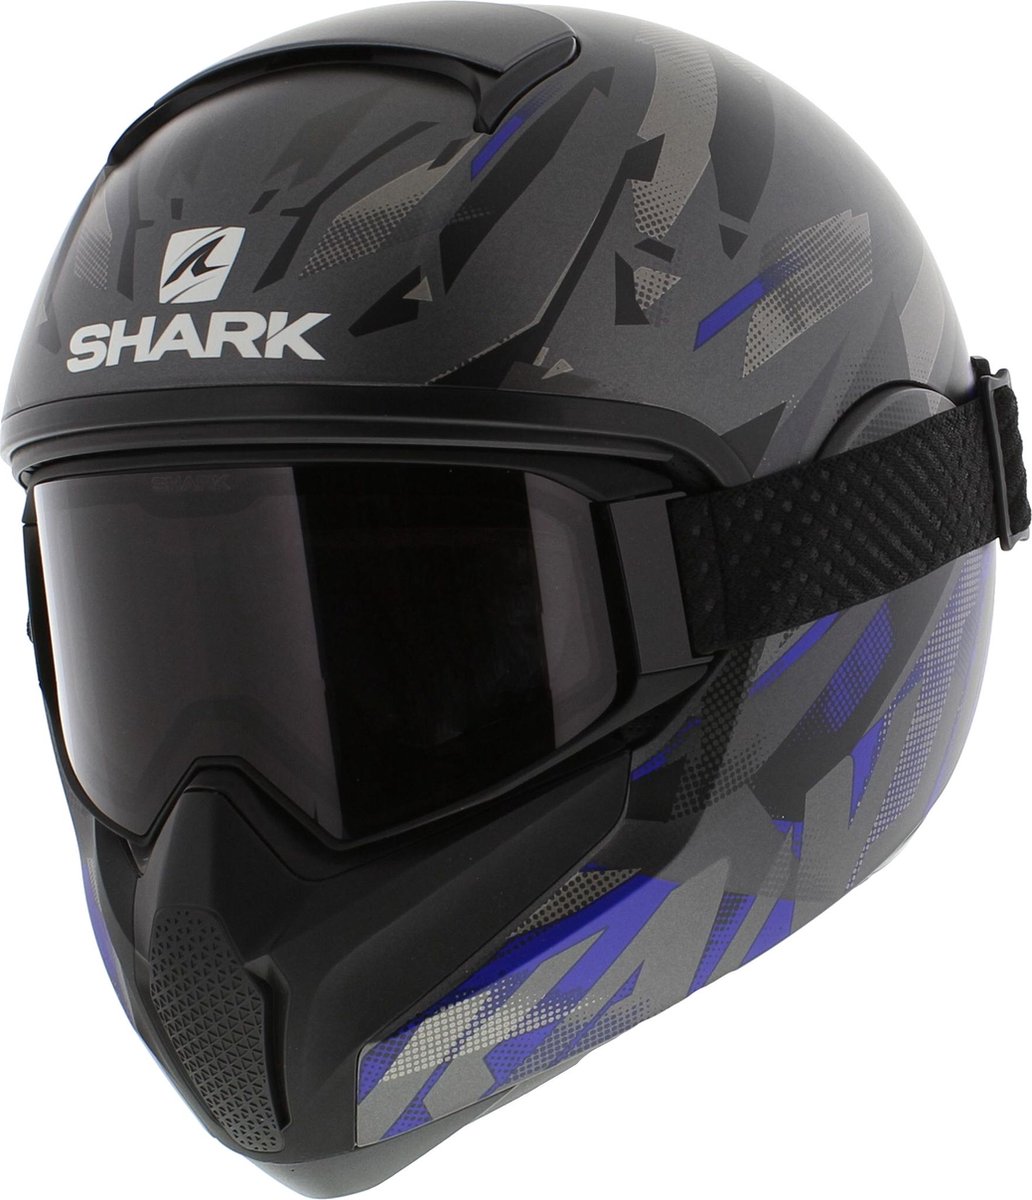 Shark Vancore 2 helm Kanhji mat antraciet blauw zwart XS - Motorhelm / Scooterhelm